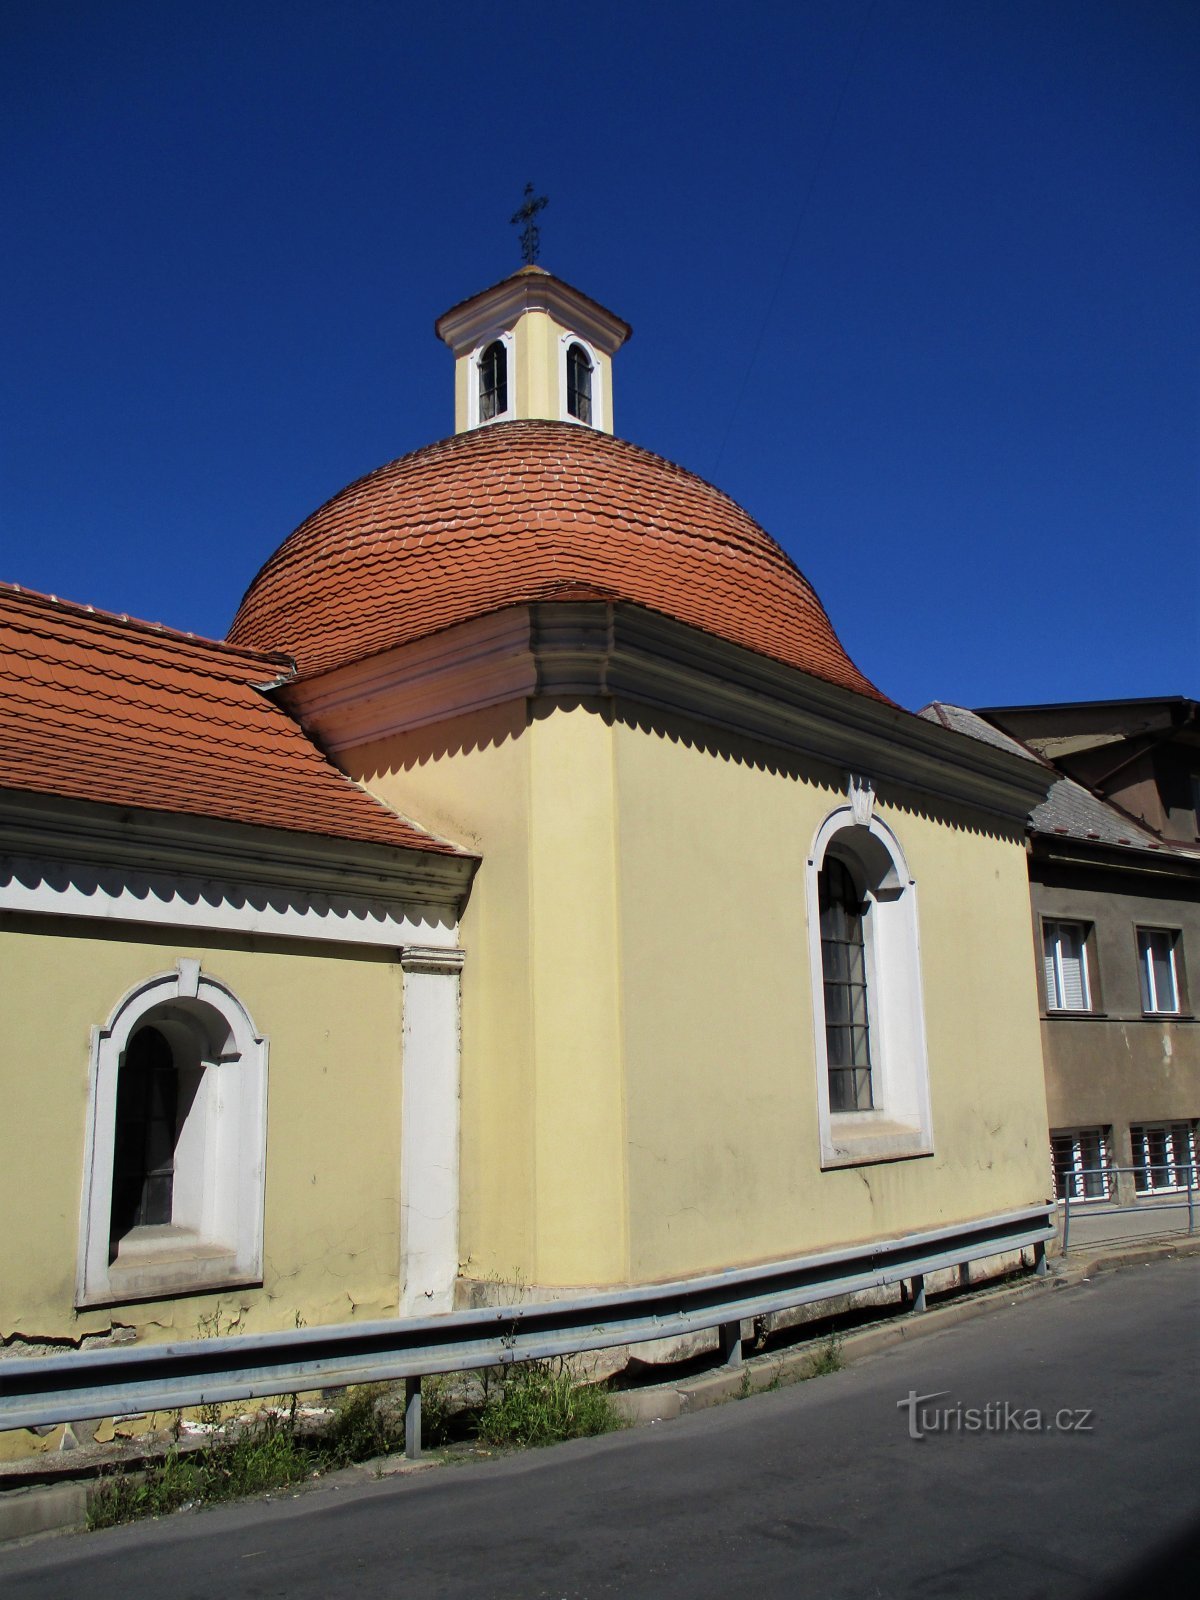 Kapela sv. Josefa (Roudnice nad Labem, 31.7.2020. srpnja XNUMX.)